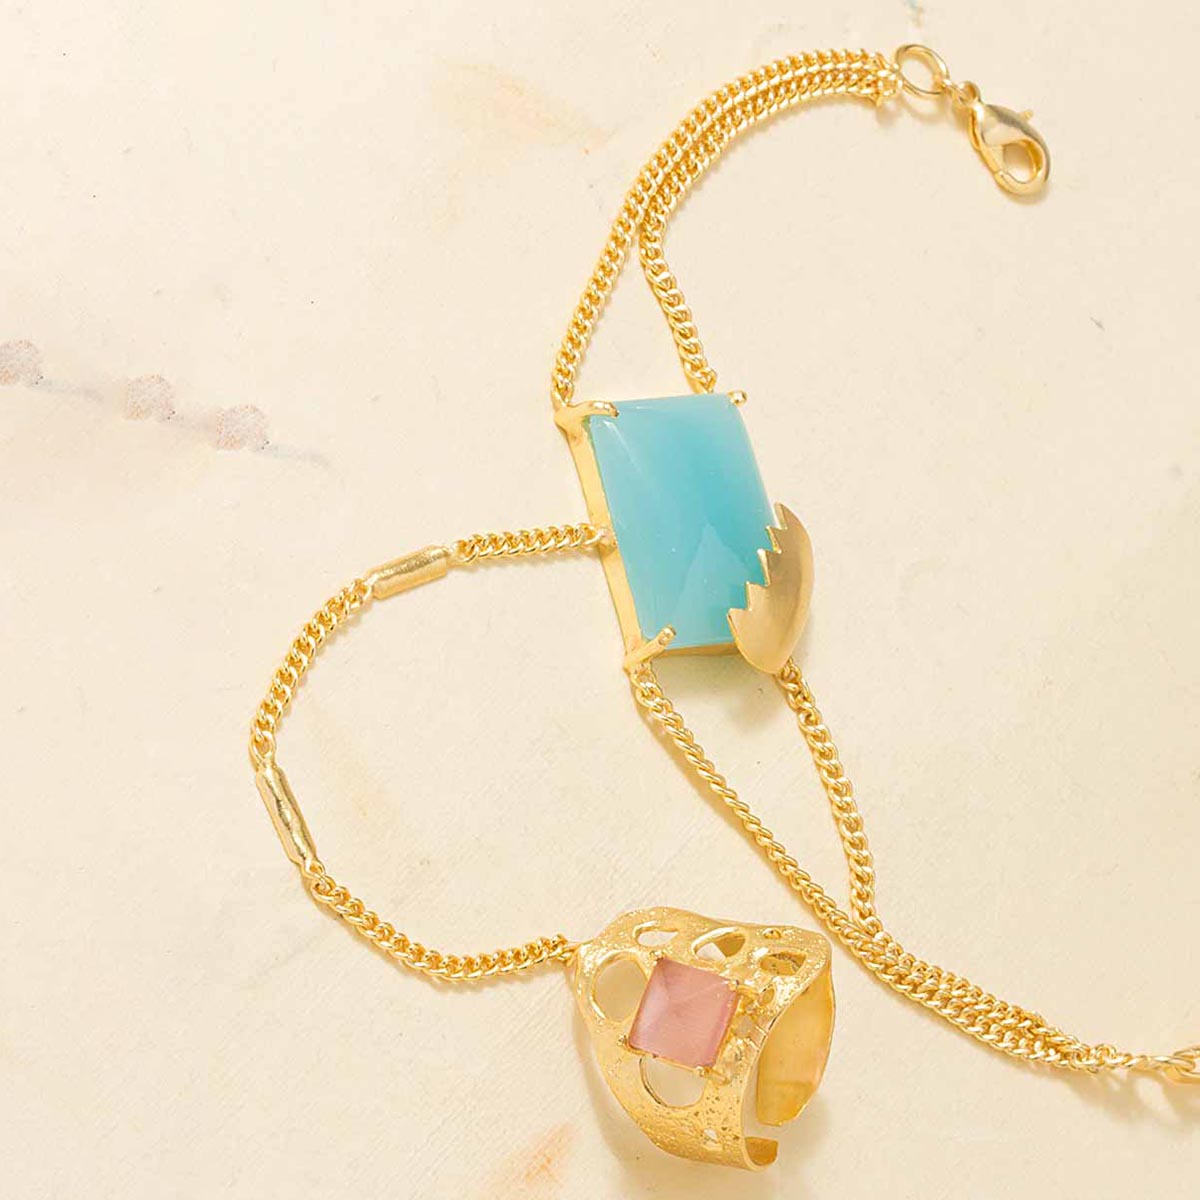 Gold Tone Slave Bracelet Decked With Pink-Blue Stone Embellishment